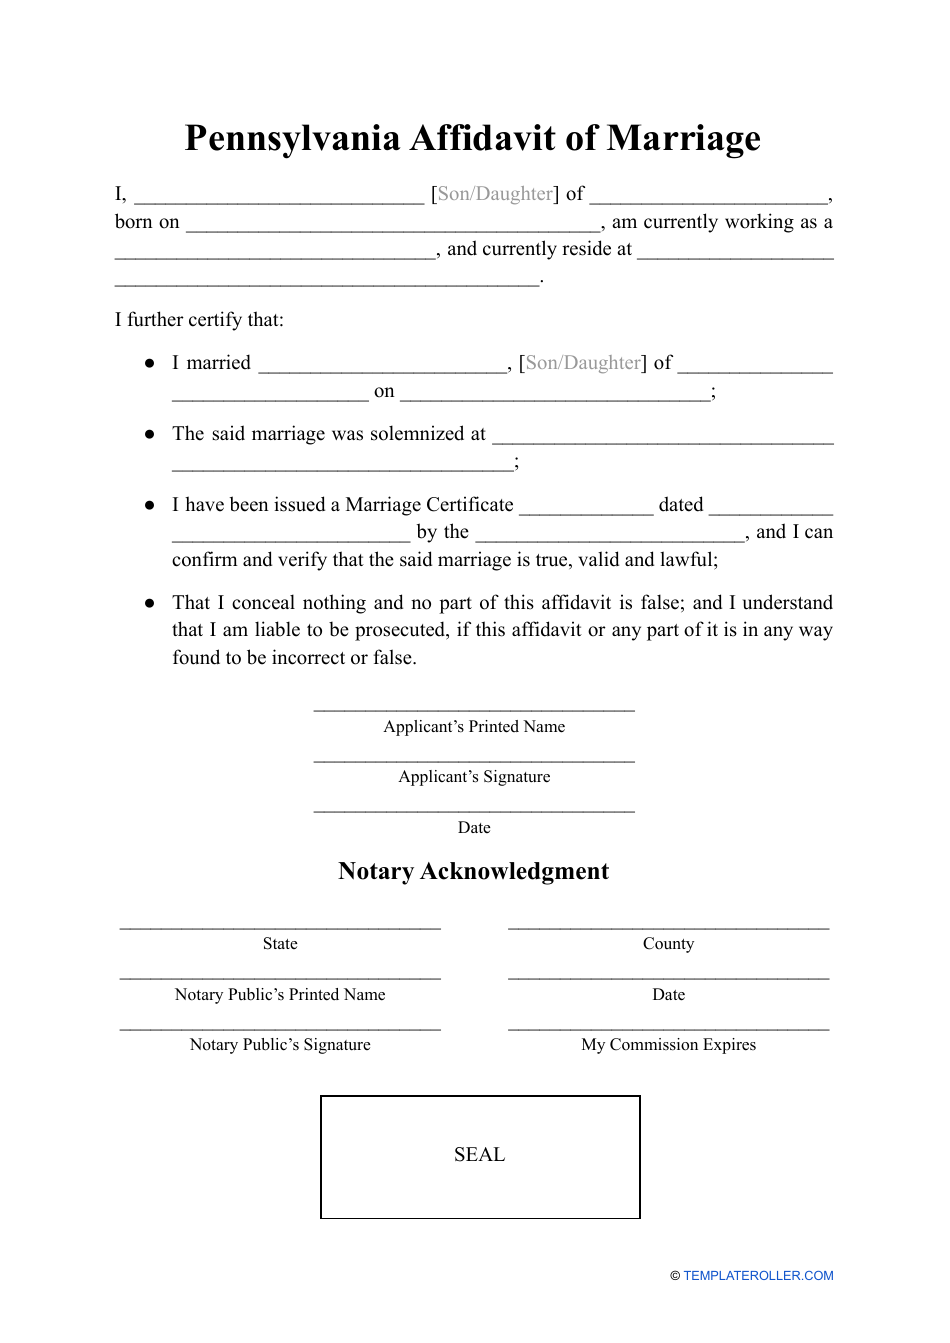 Affidavit of Marriage - Pennsylvania, Page 1